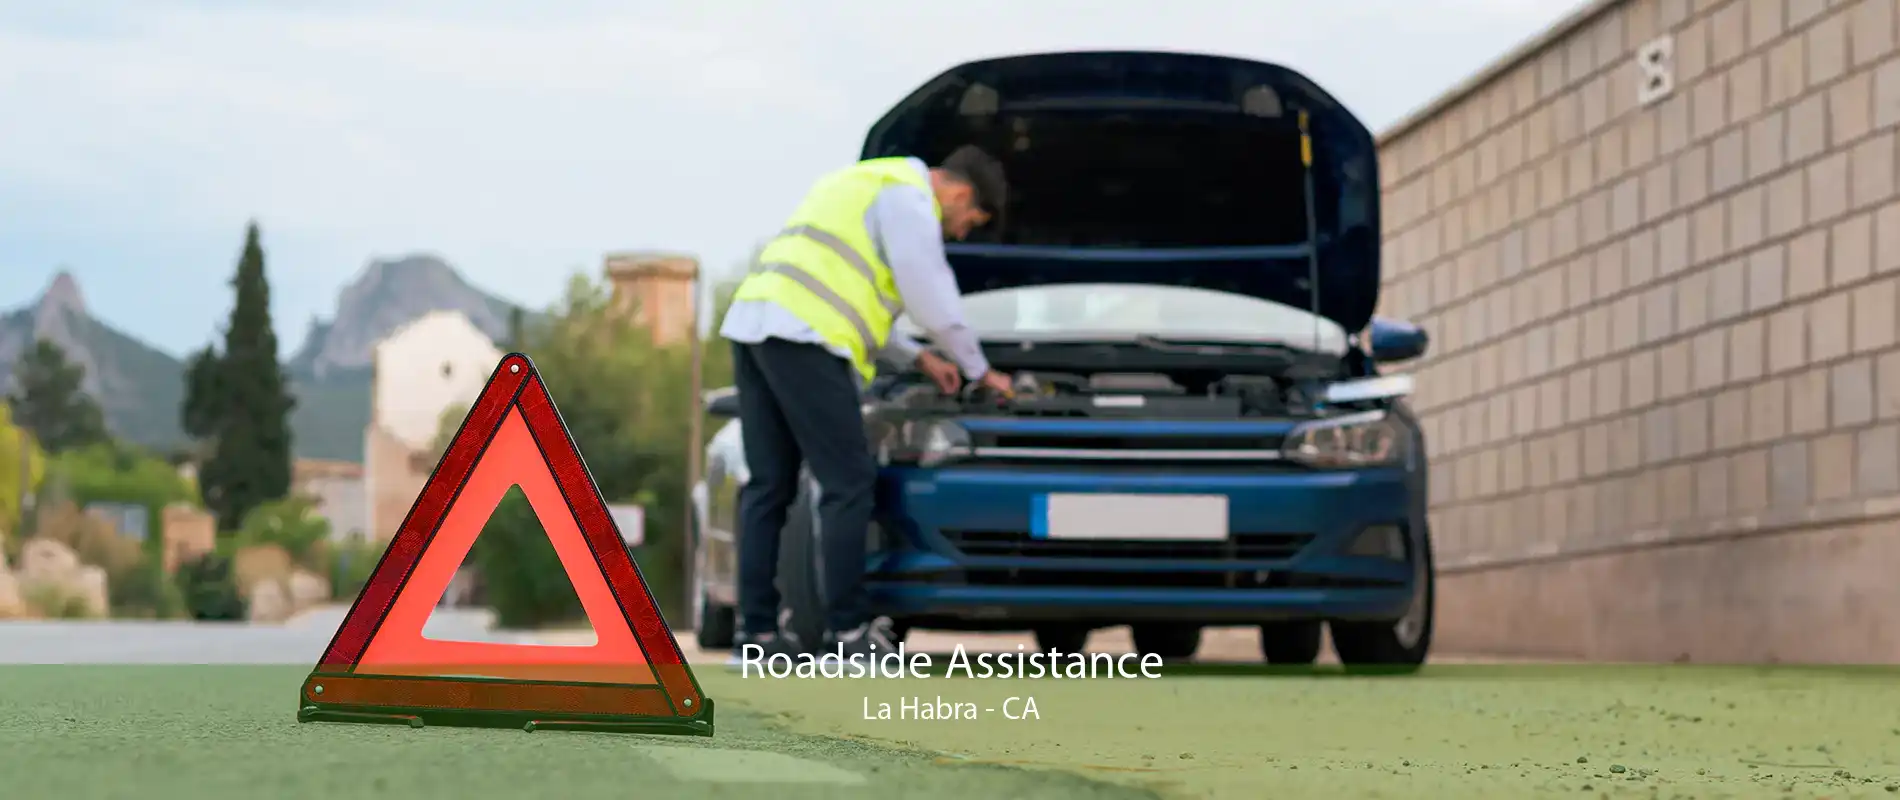 Roadside Assistance La Habra - CA